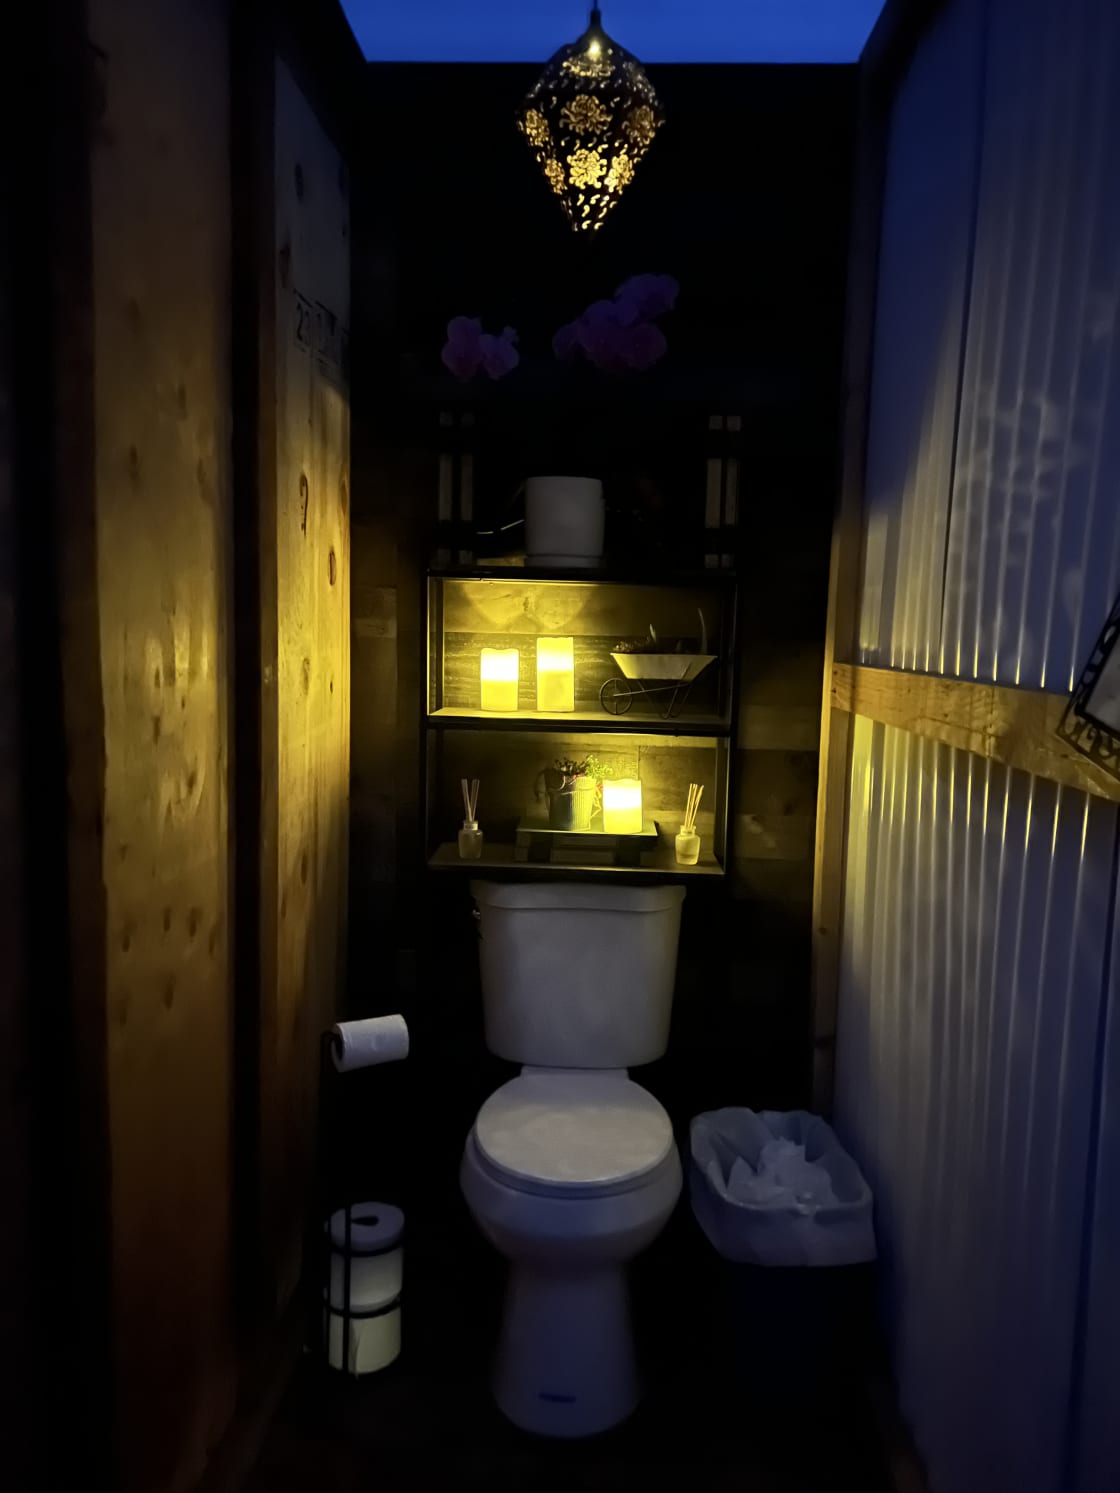 Toilet room at night